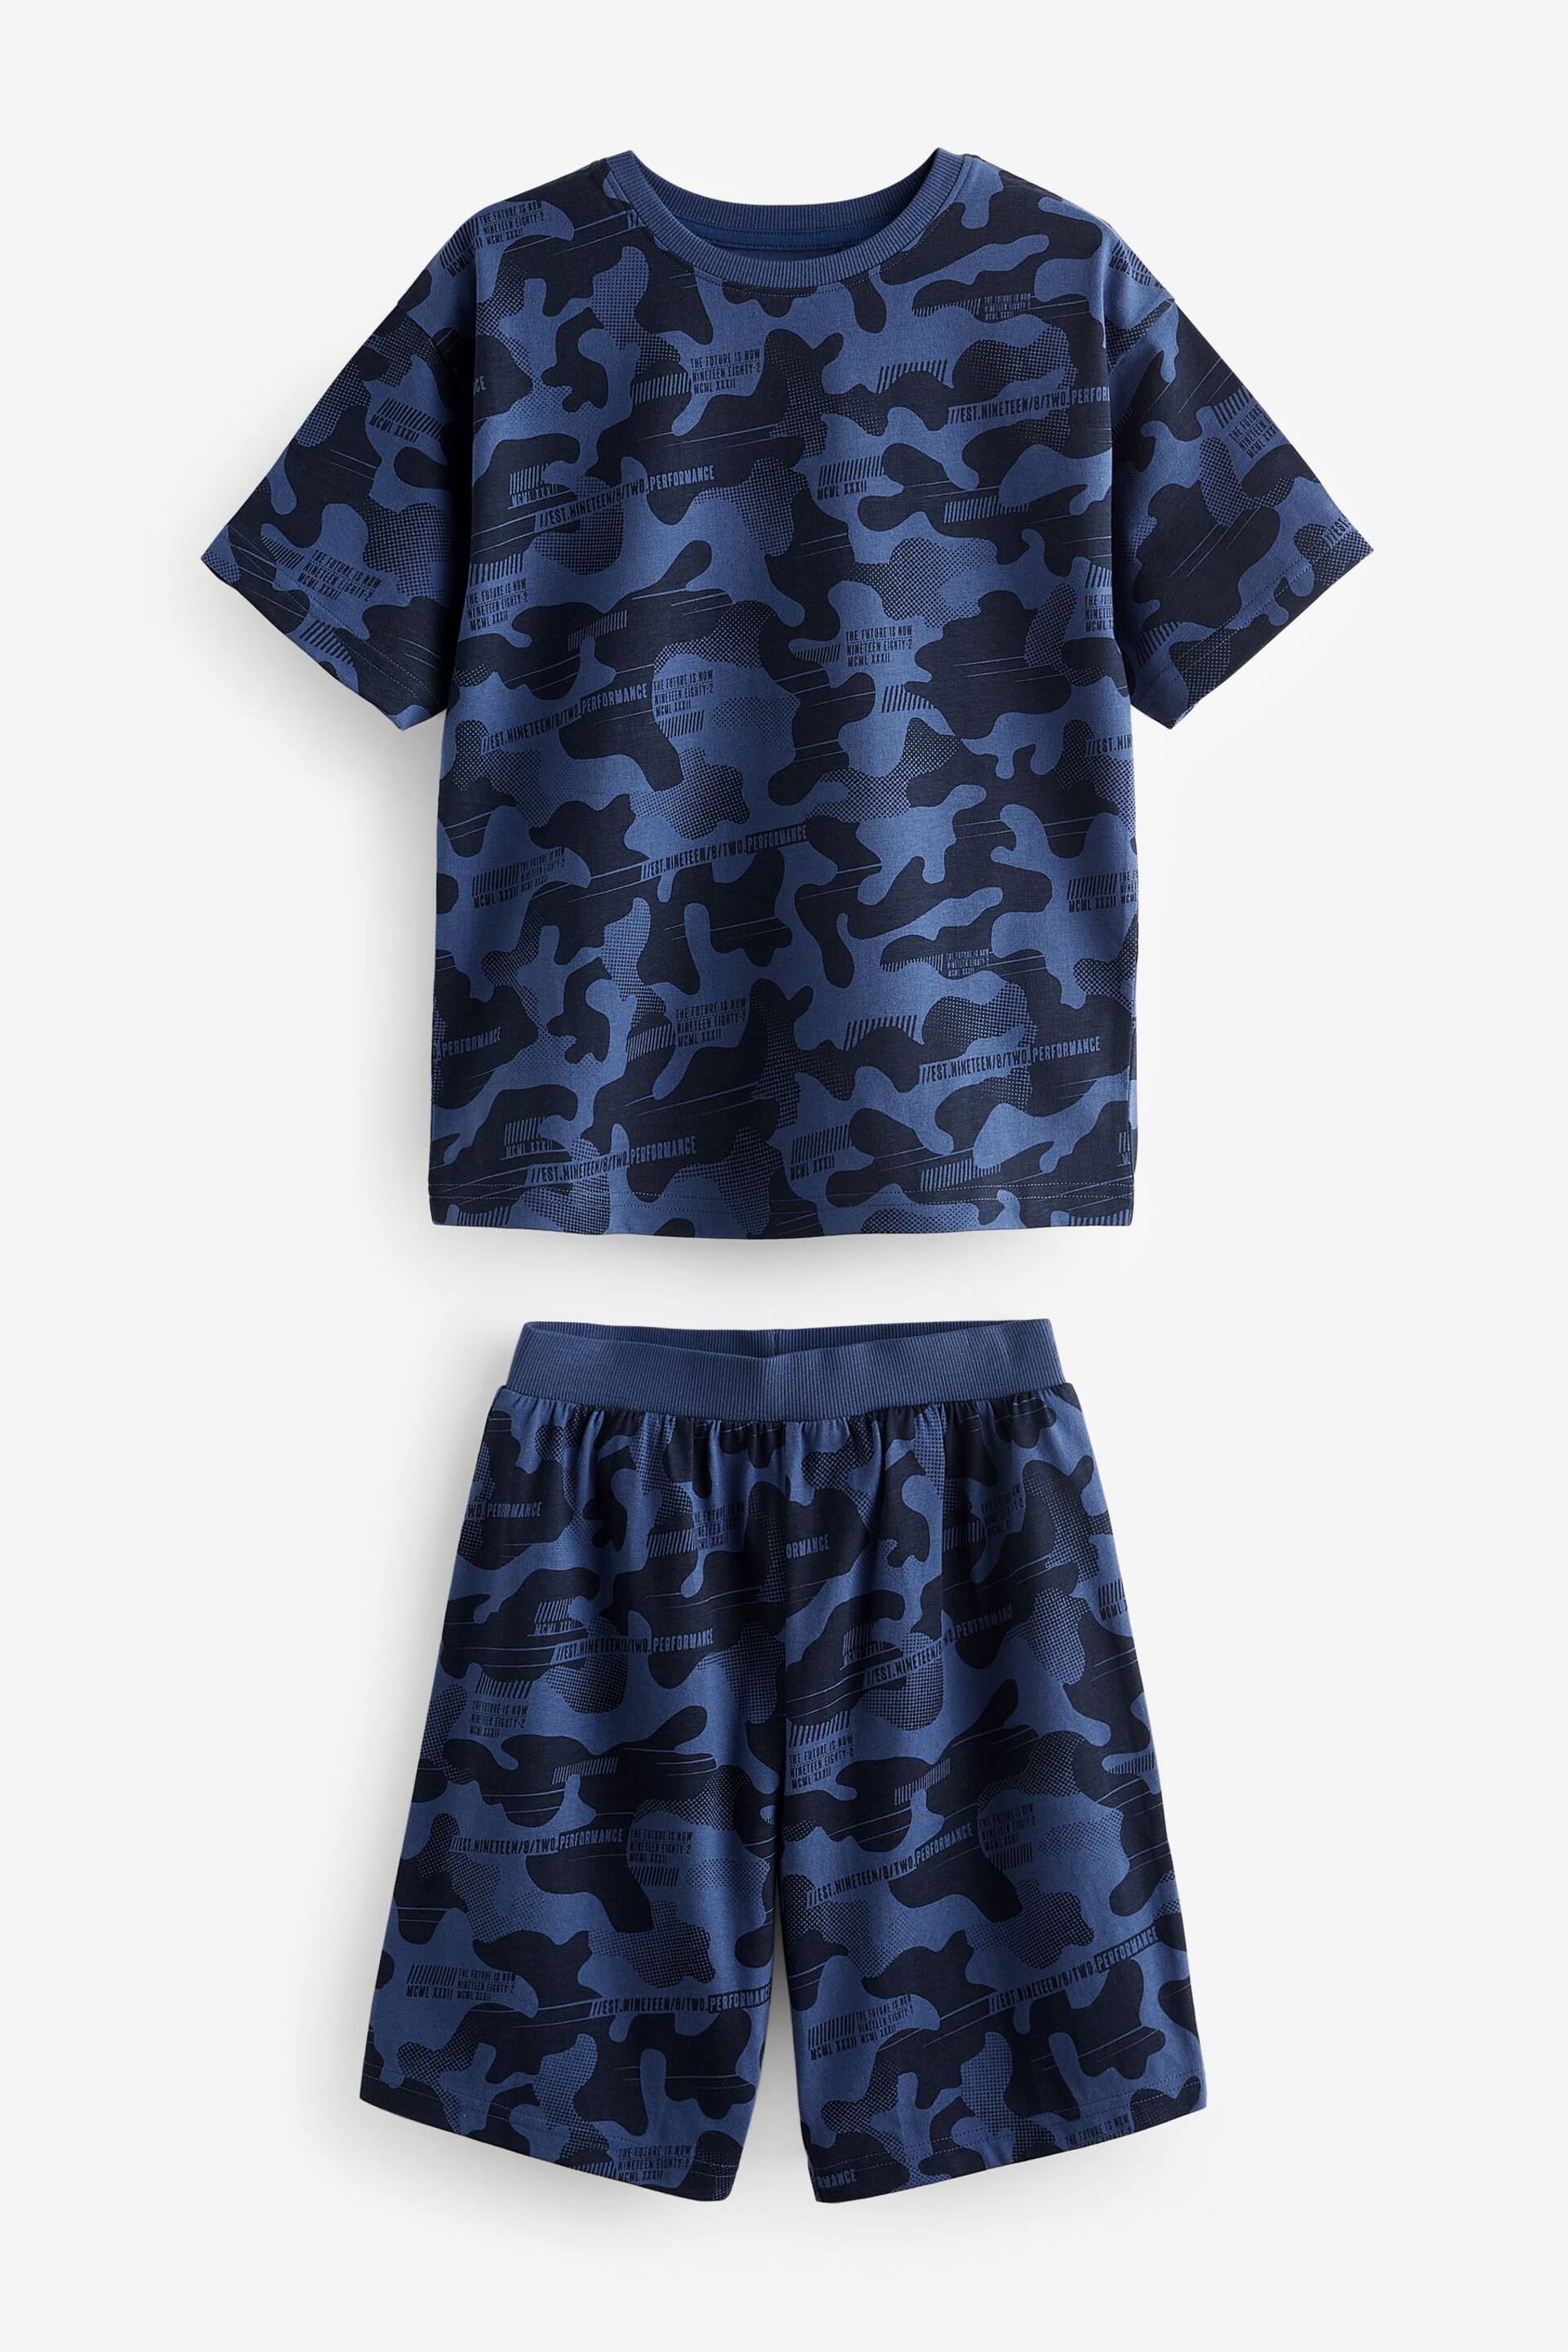 Blue/Grey/Green Camouflage Short Pyjamas 3 Pack (3-16yrs) - Image 5 of 8